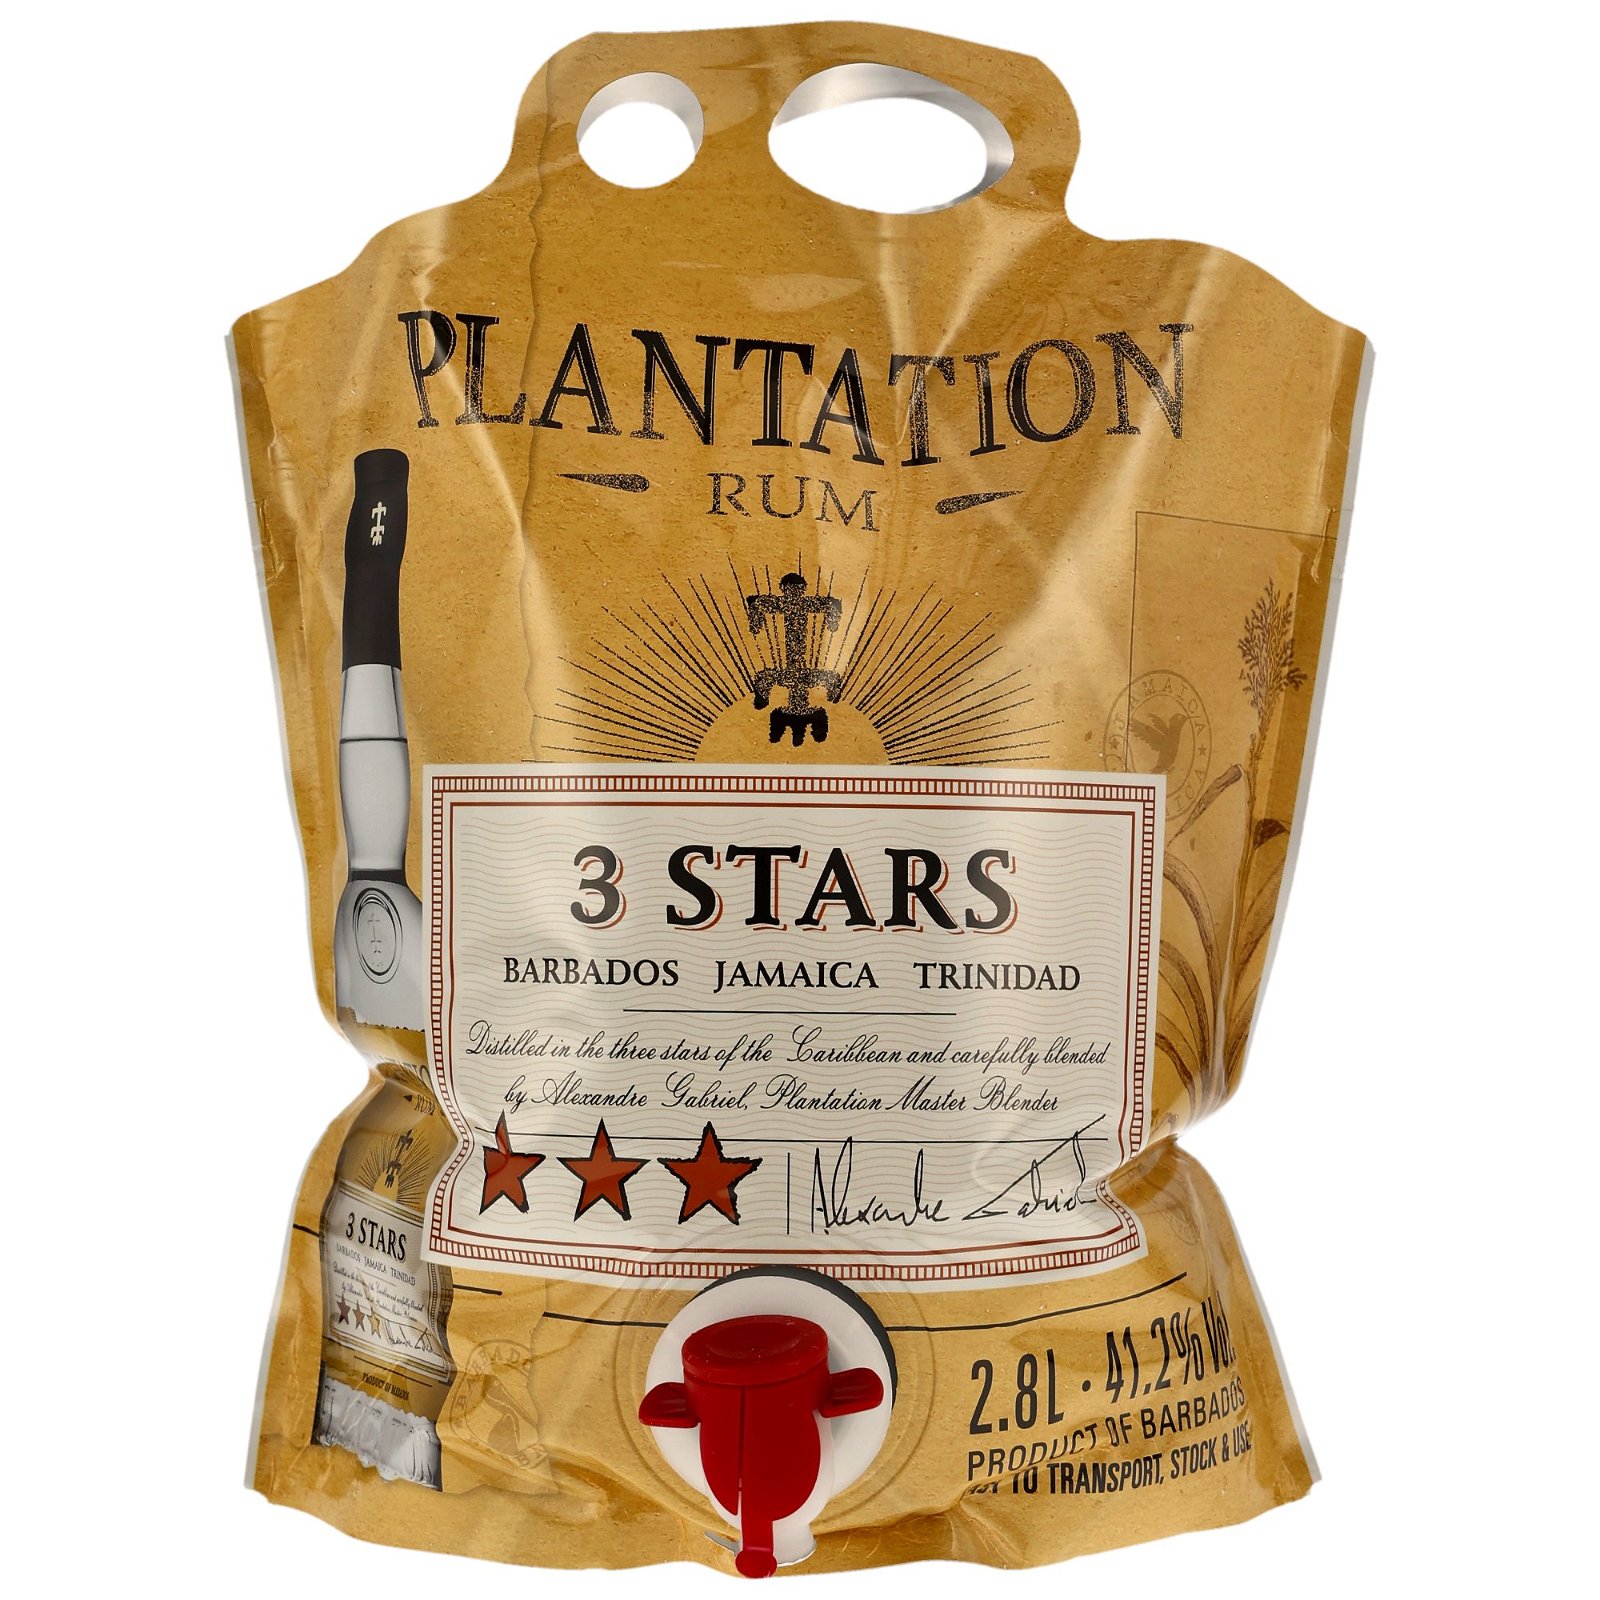 Plantation 3 Stars Barbados Jamaica Trinidad (2,8 Liter)